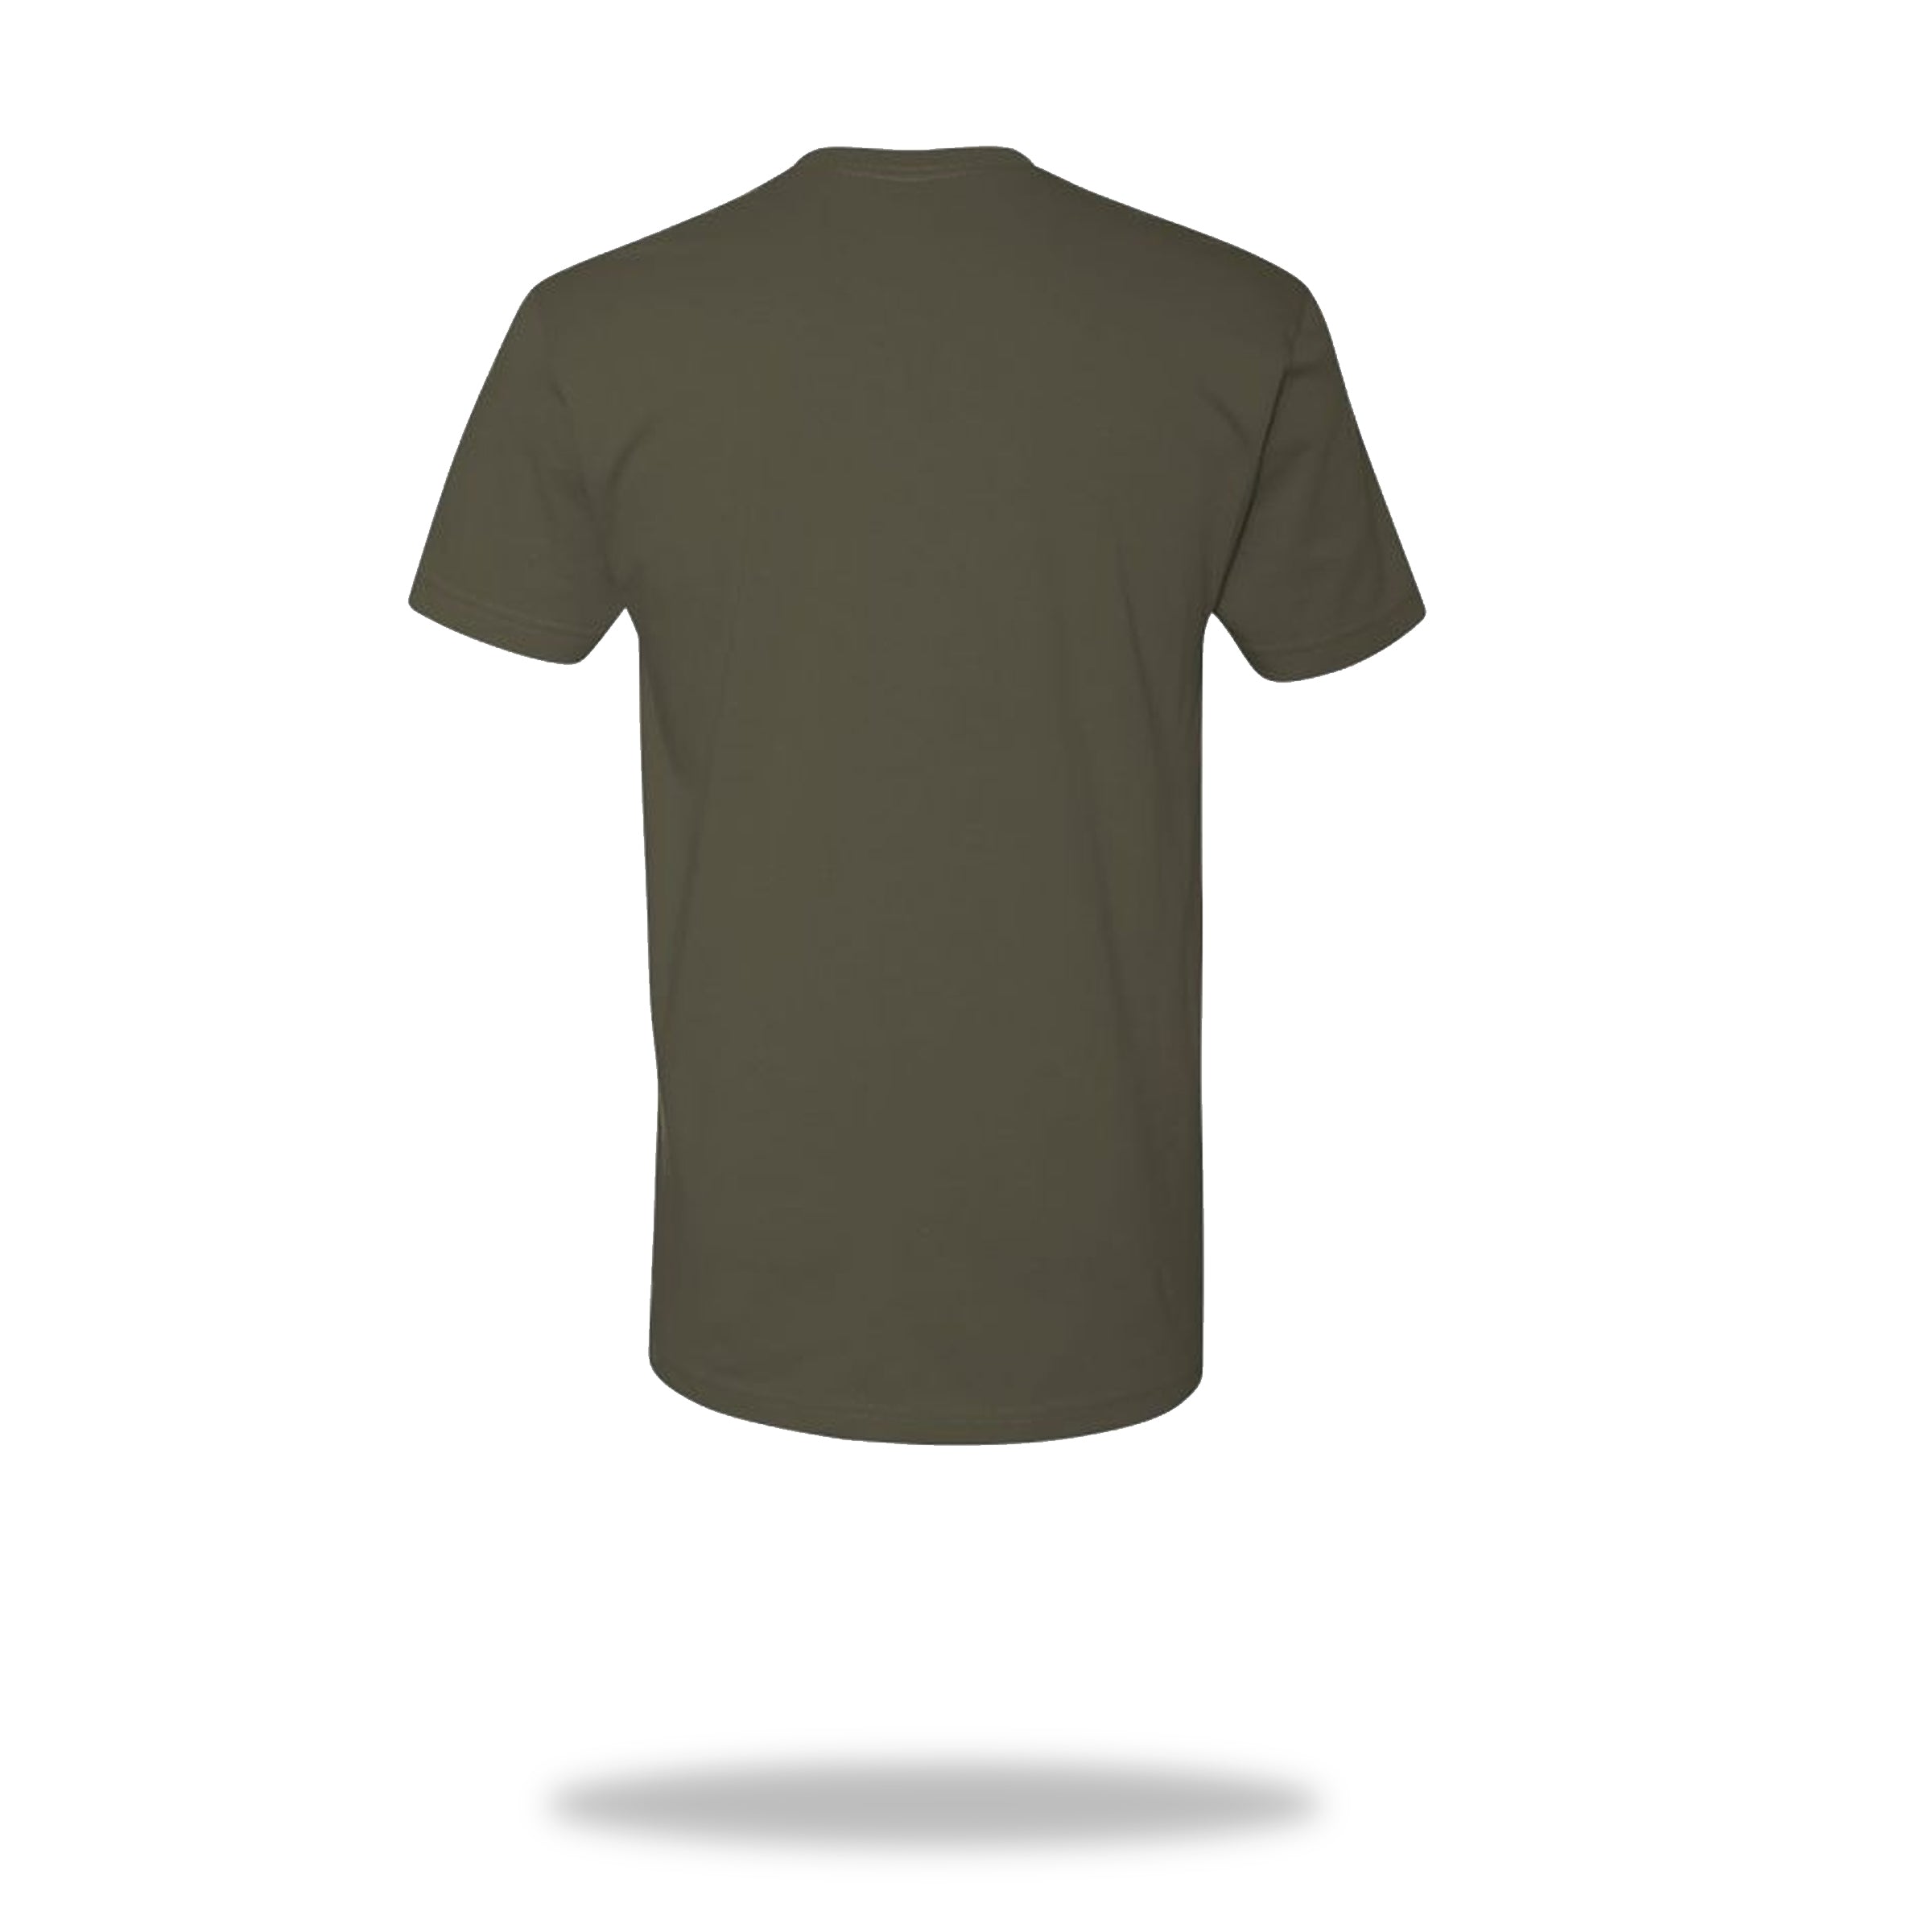 Military Green Born & Raised Unisex T-Shirt